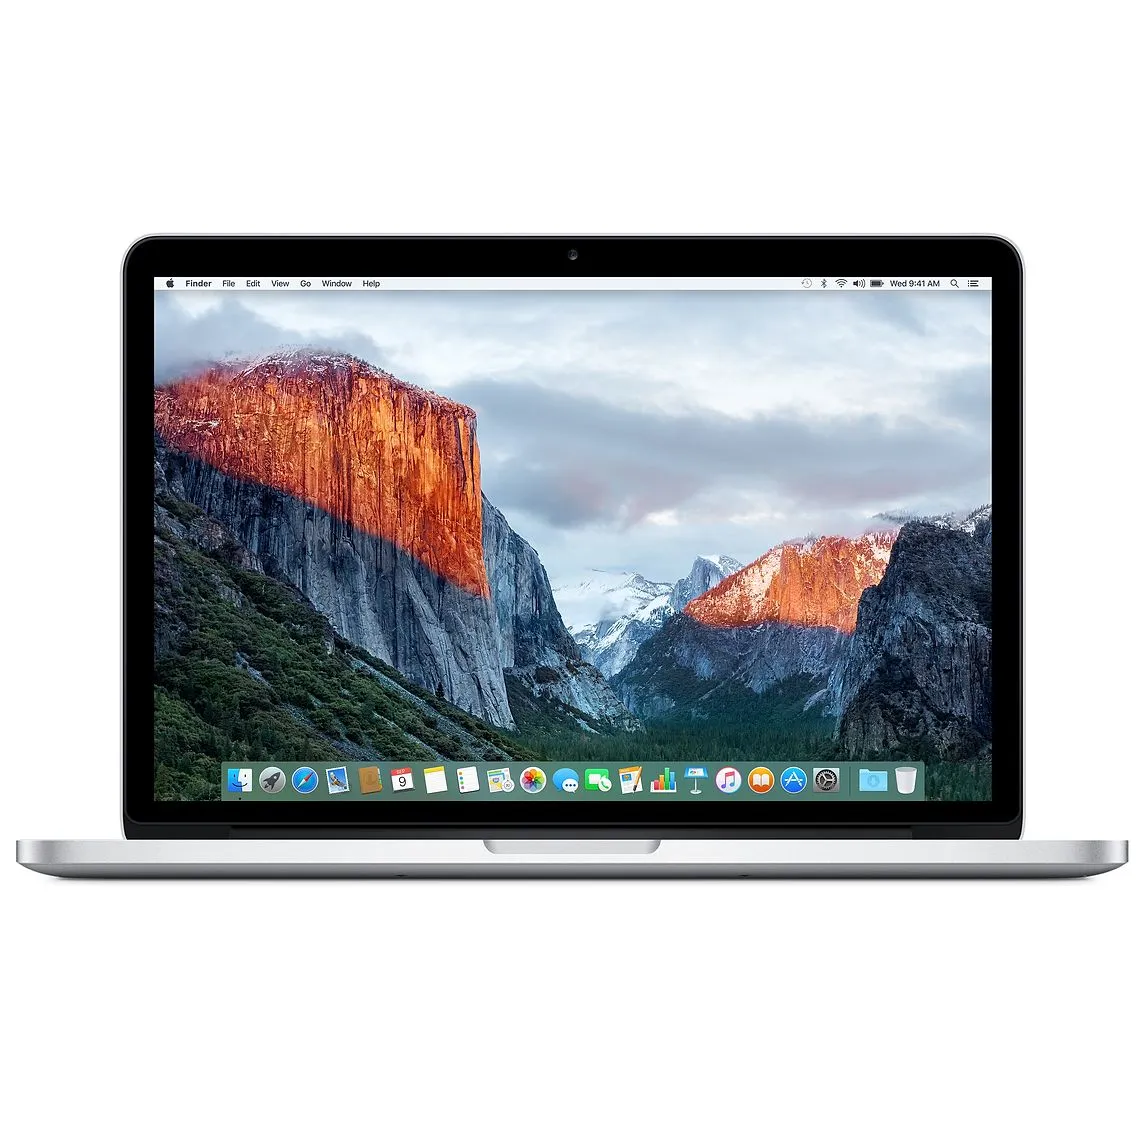 Macbook Pro 15-Inch “Core i7” 2.4 GHz (Early 2013) 8GB RAM, 512GB SSD Silver